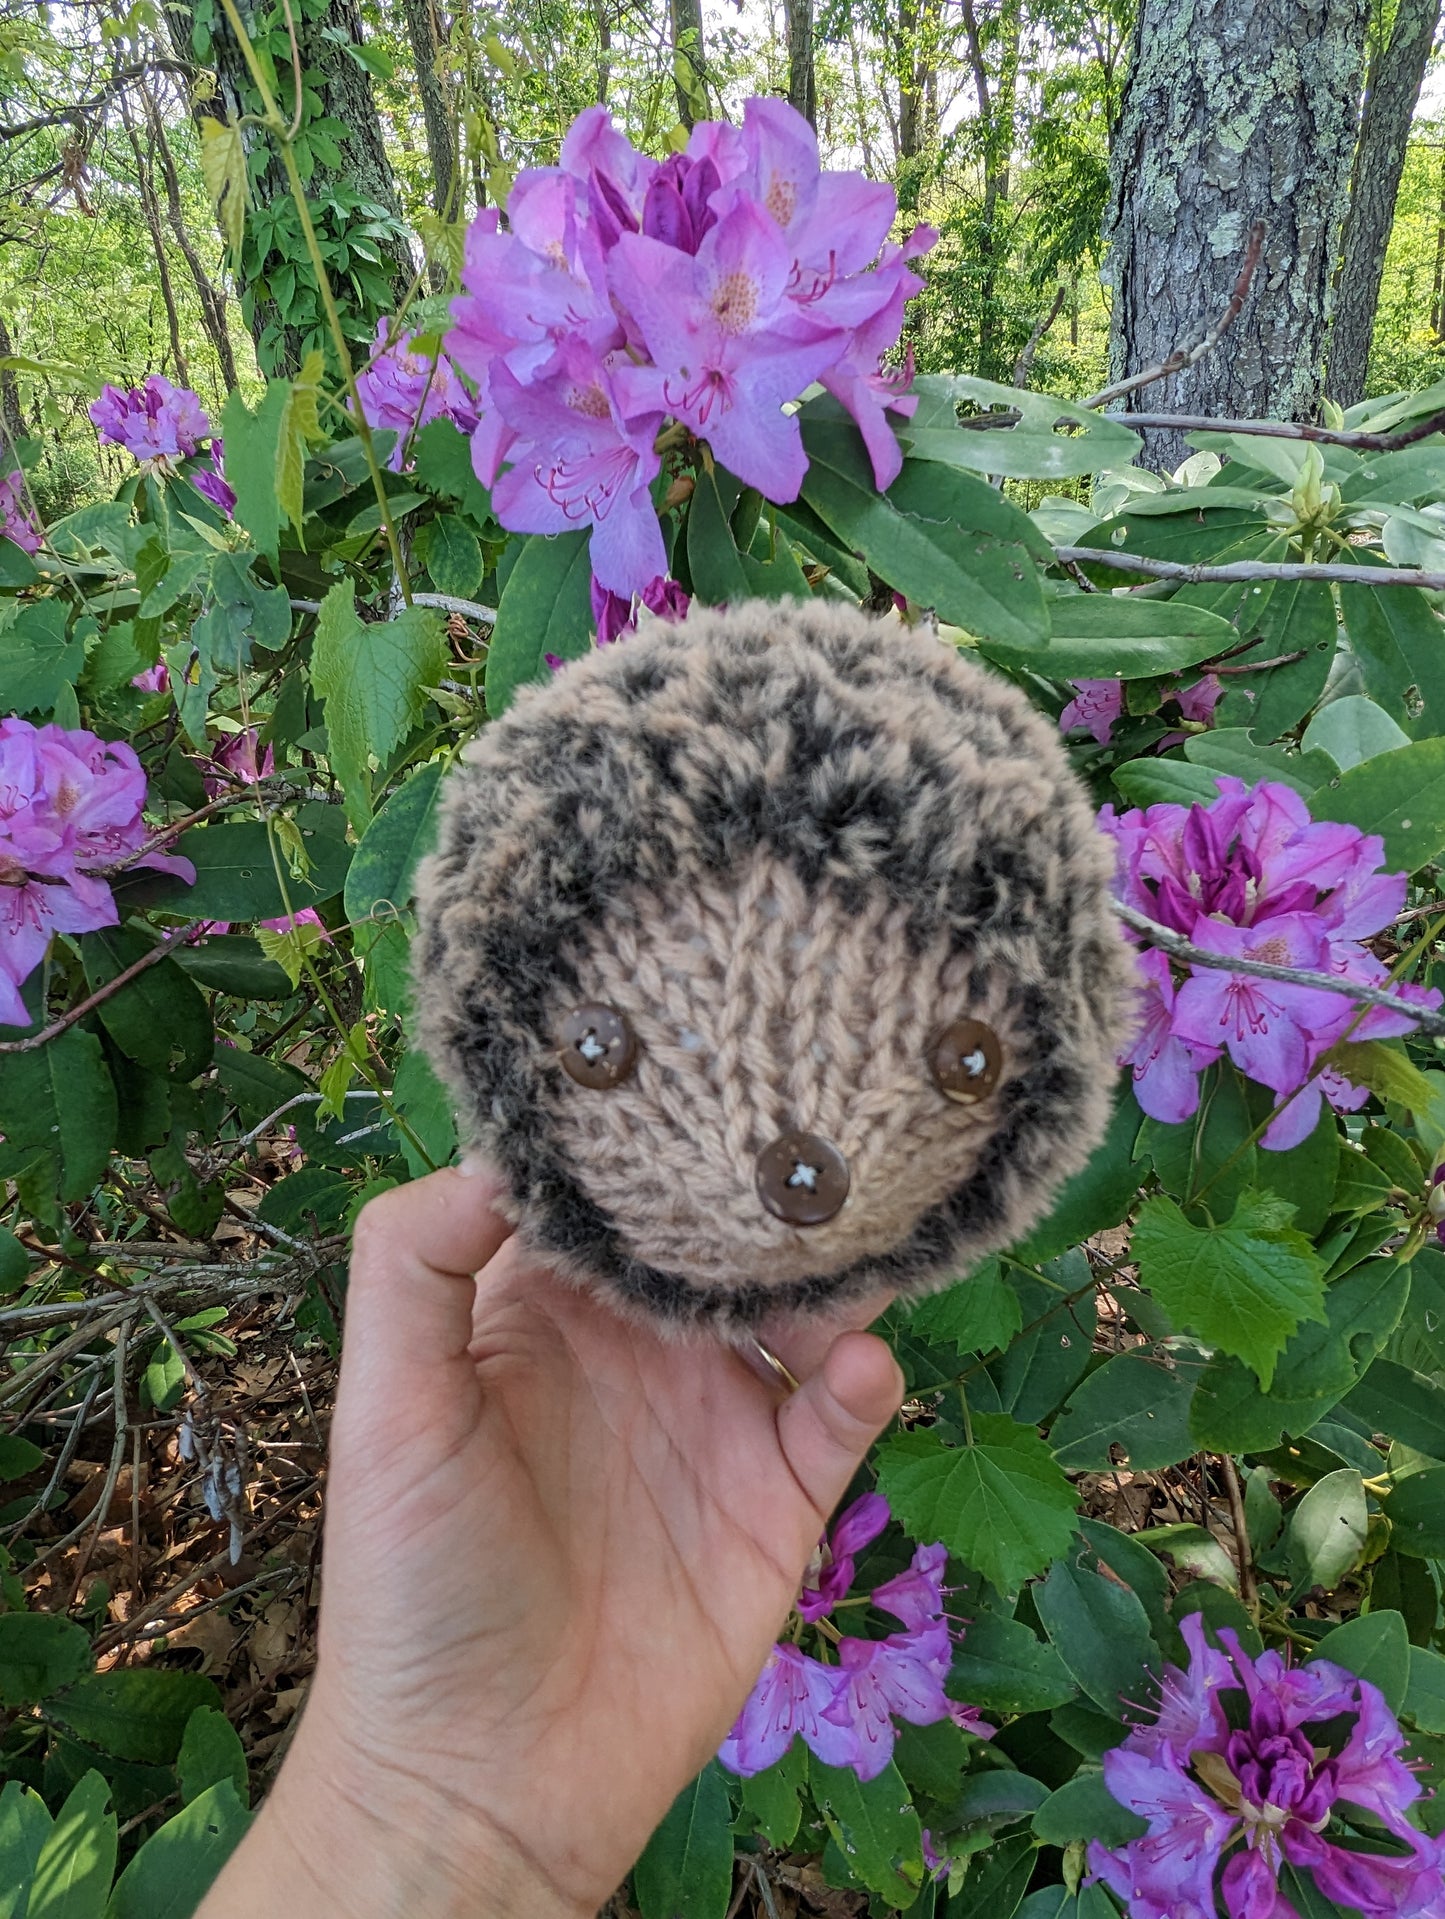 Mini Hedgehog Companions